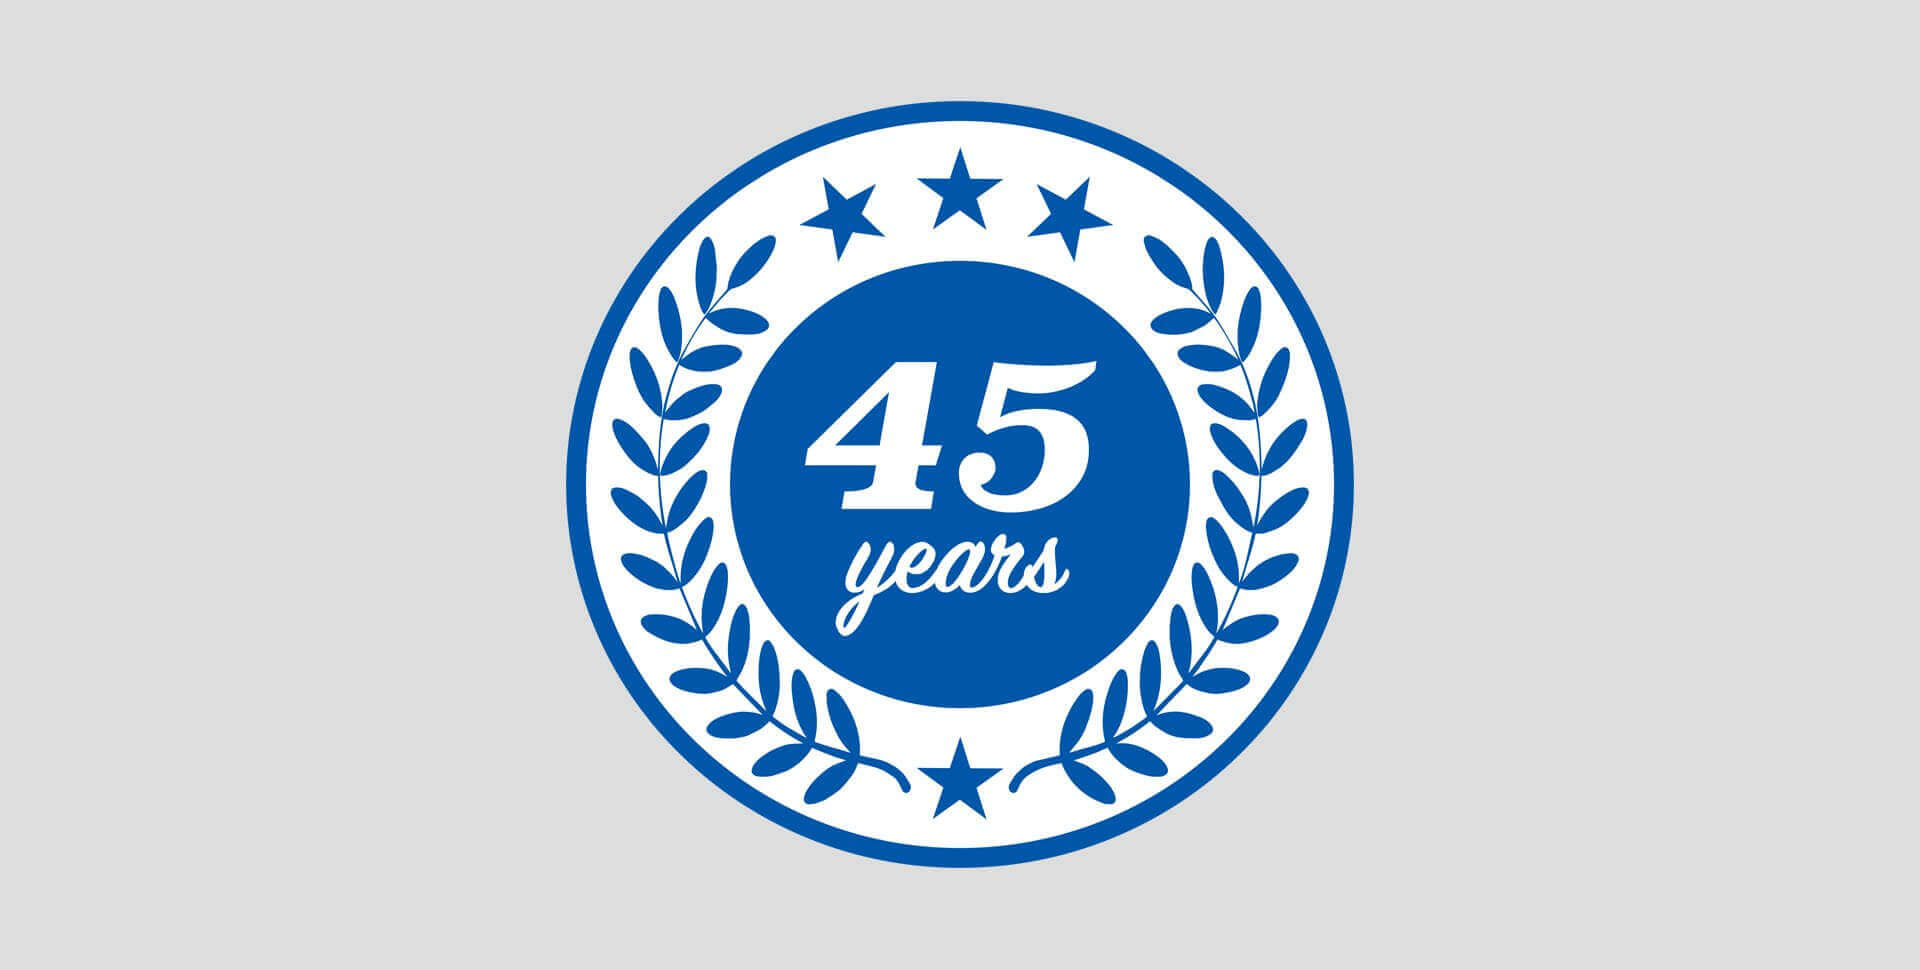 2017 – 45 Years